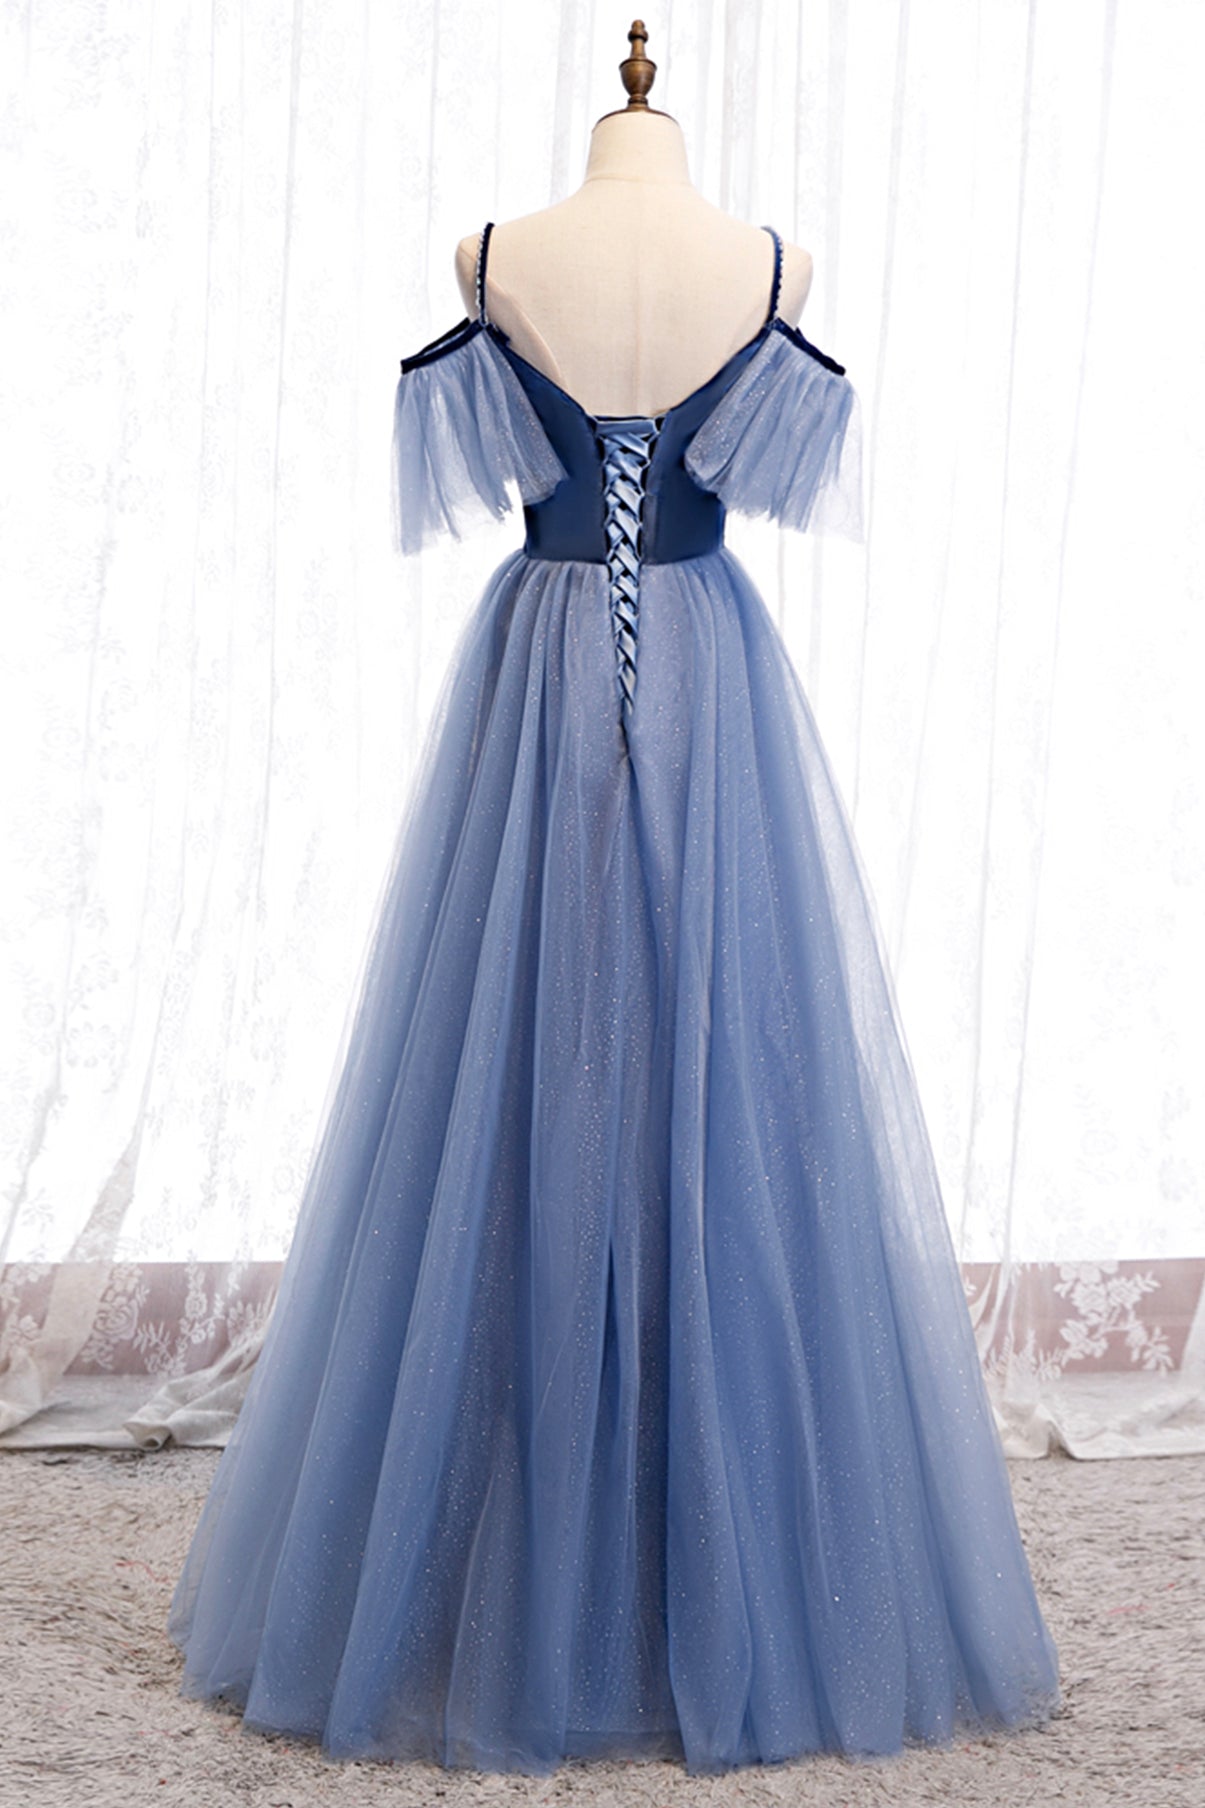 Dress Ideas, Blue Velvet Tulle Long Prom Dresses, Blue A-Line Evening Dresses